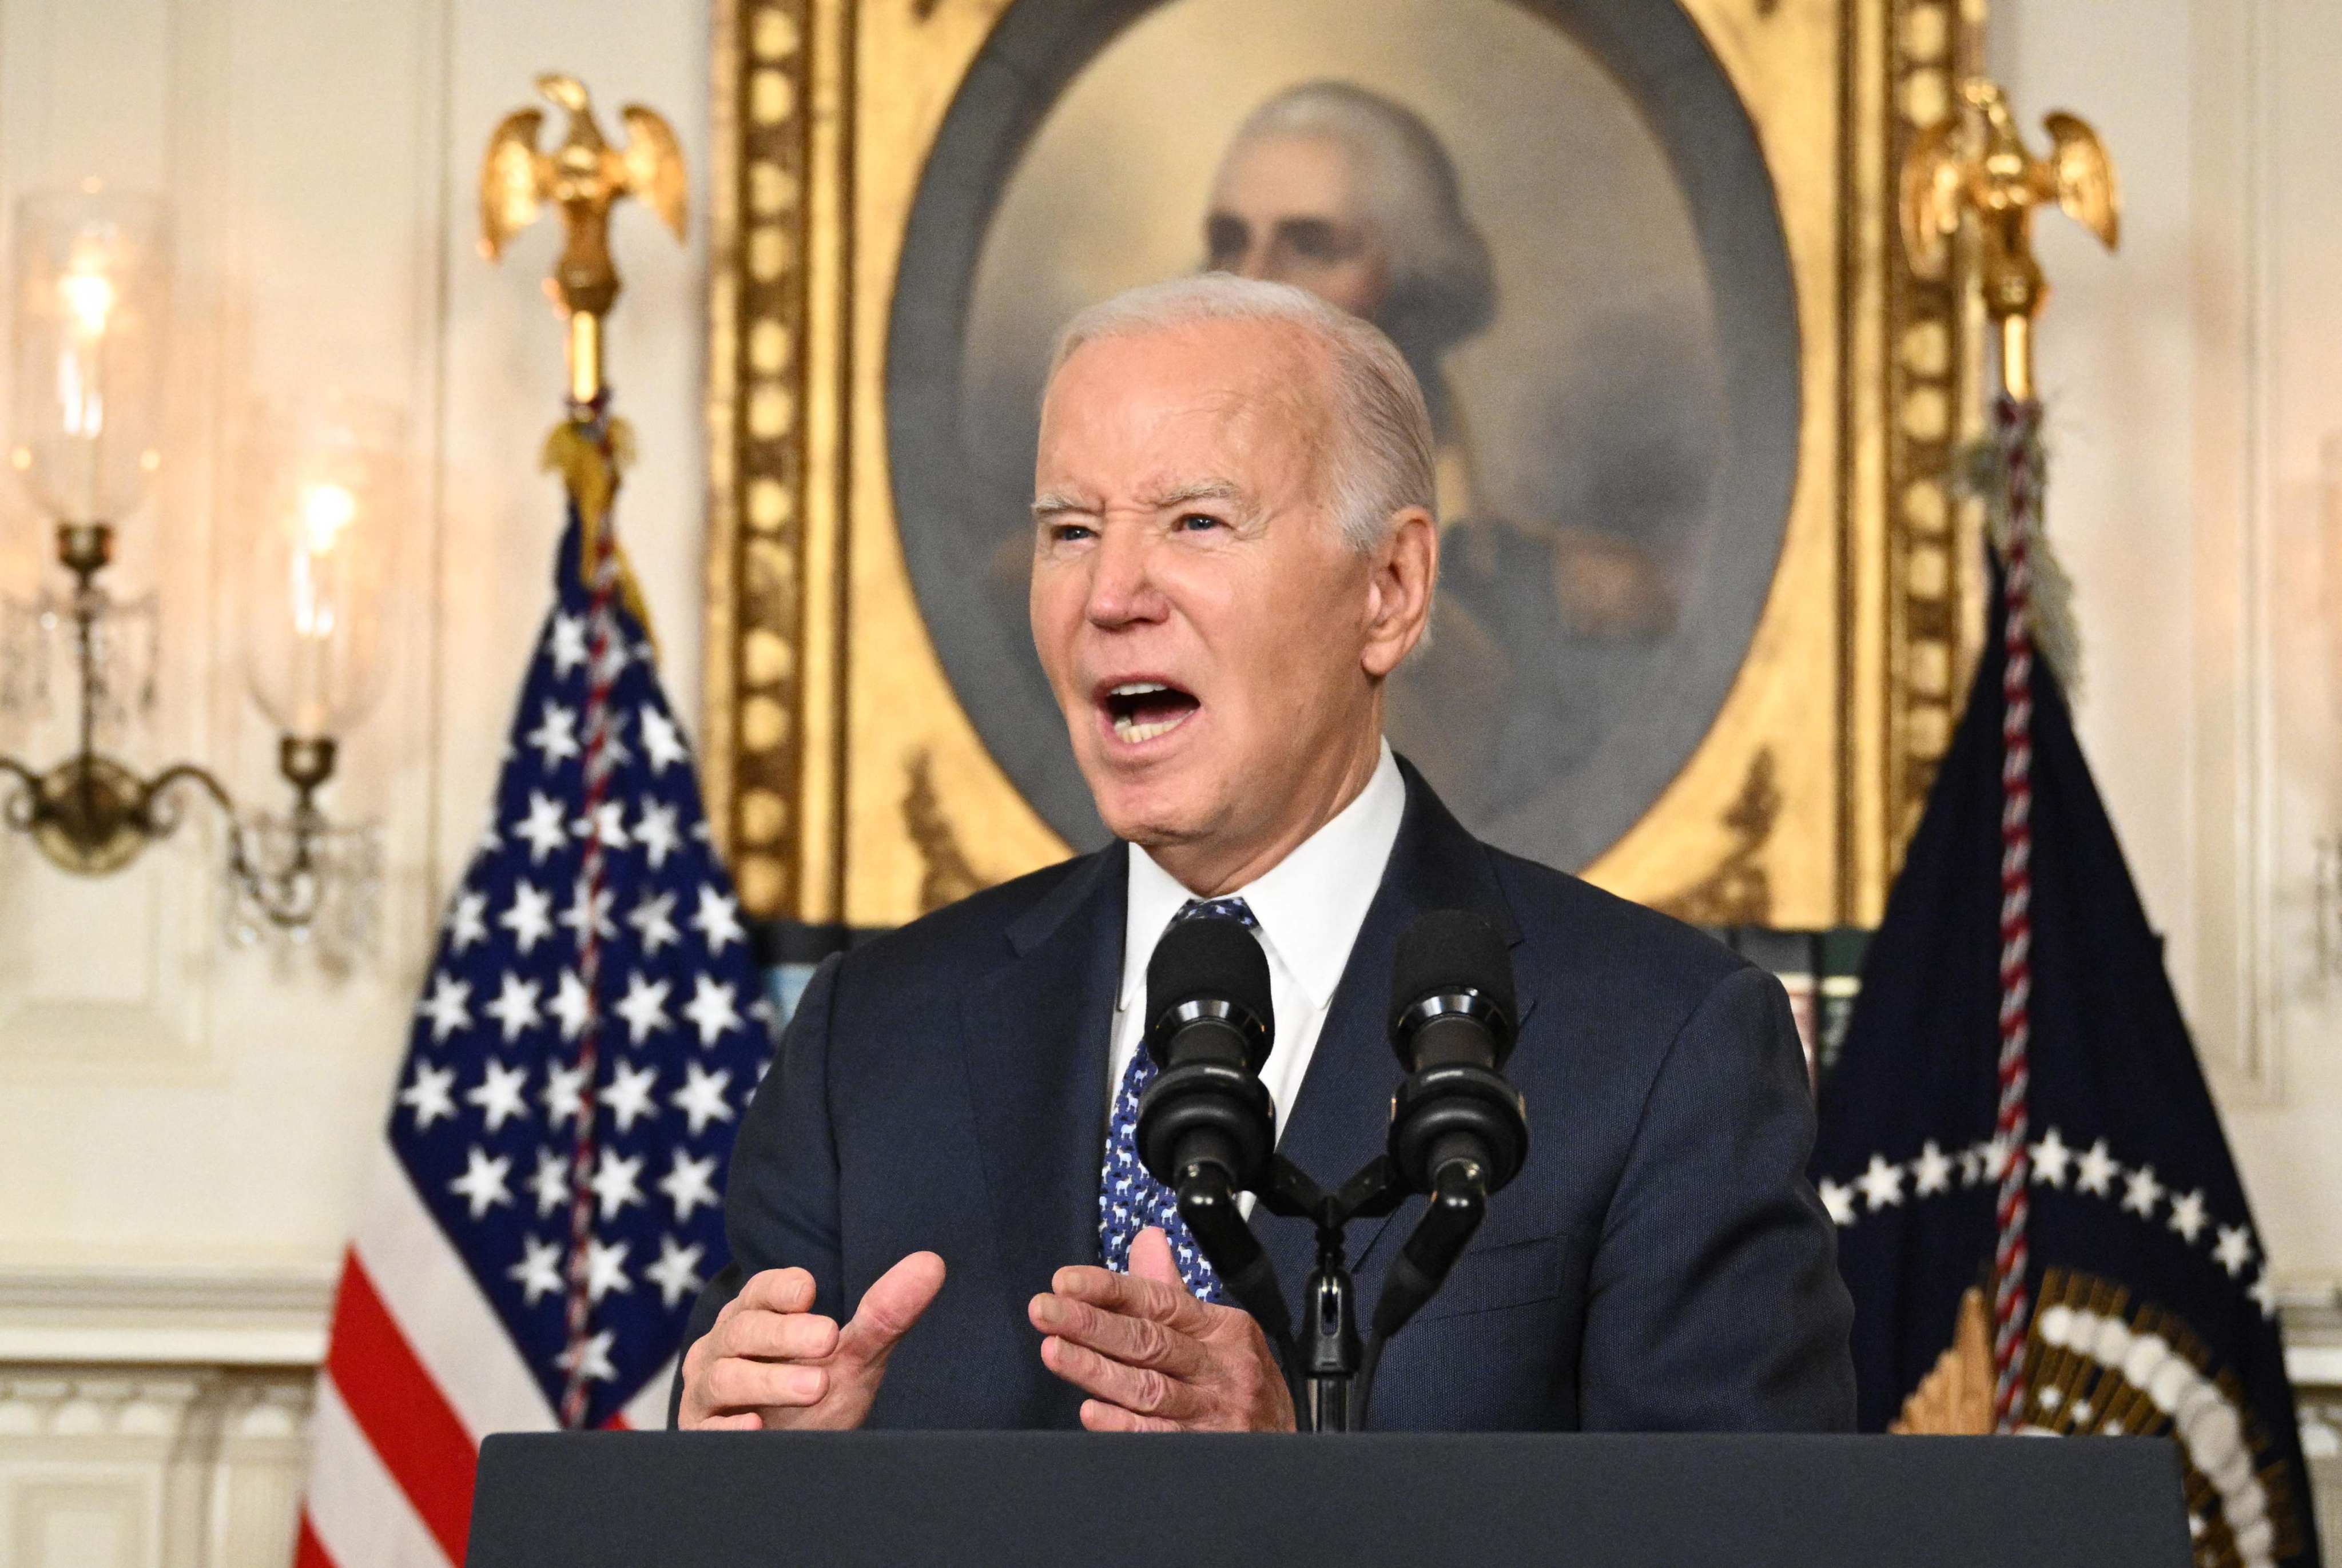 President Joe Biden delivering remarks at the White House Thursday evening. Photo: AFP